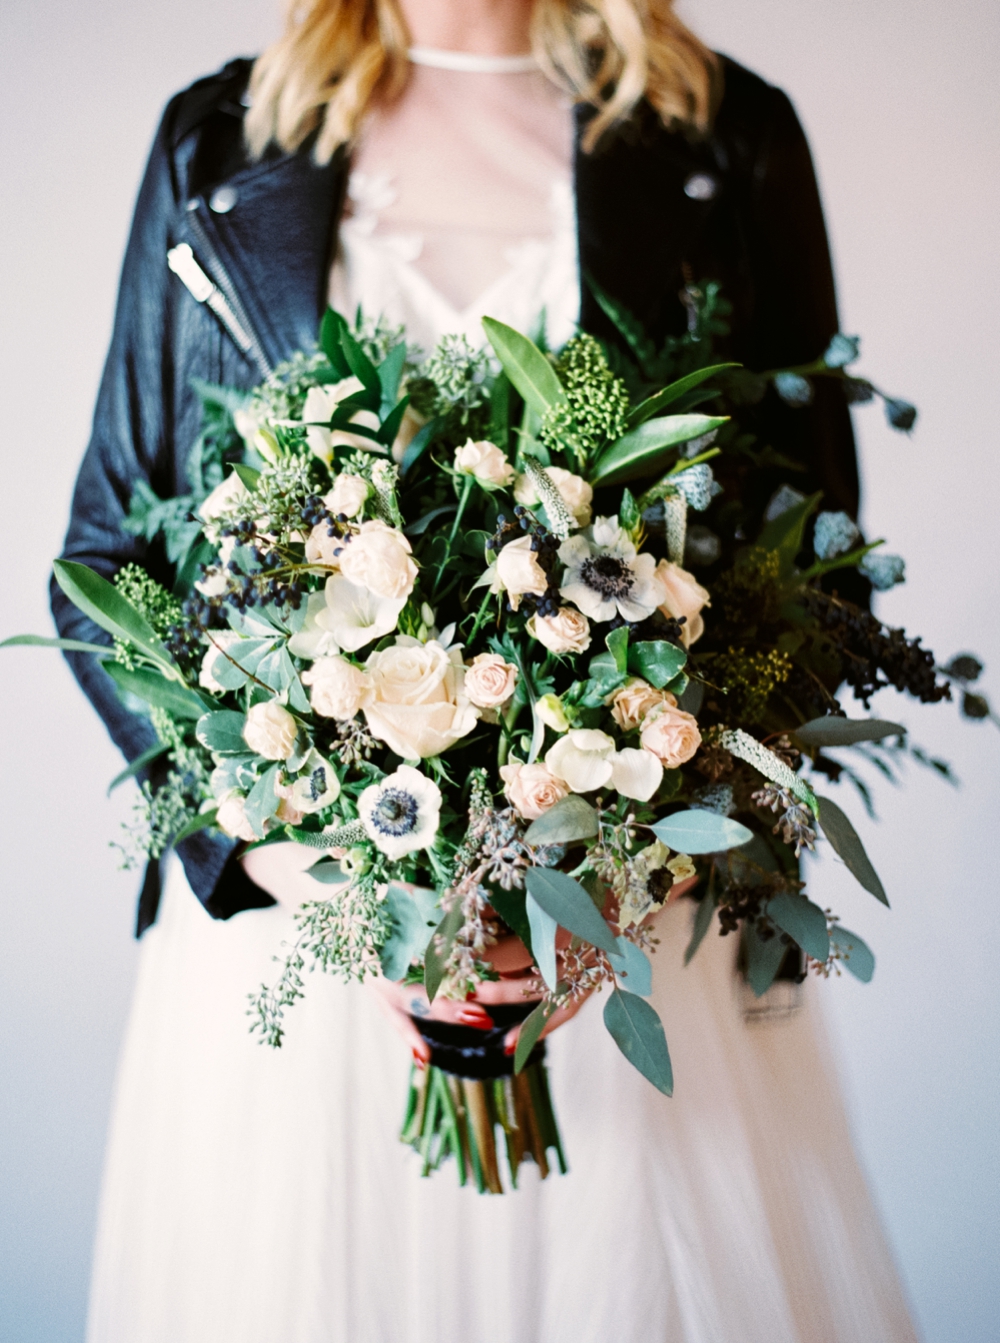 rocker wedding inspiration | hayley paige dress | editorial photographer 